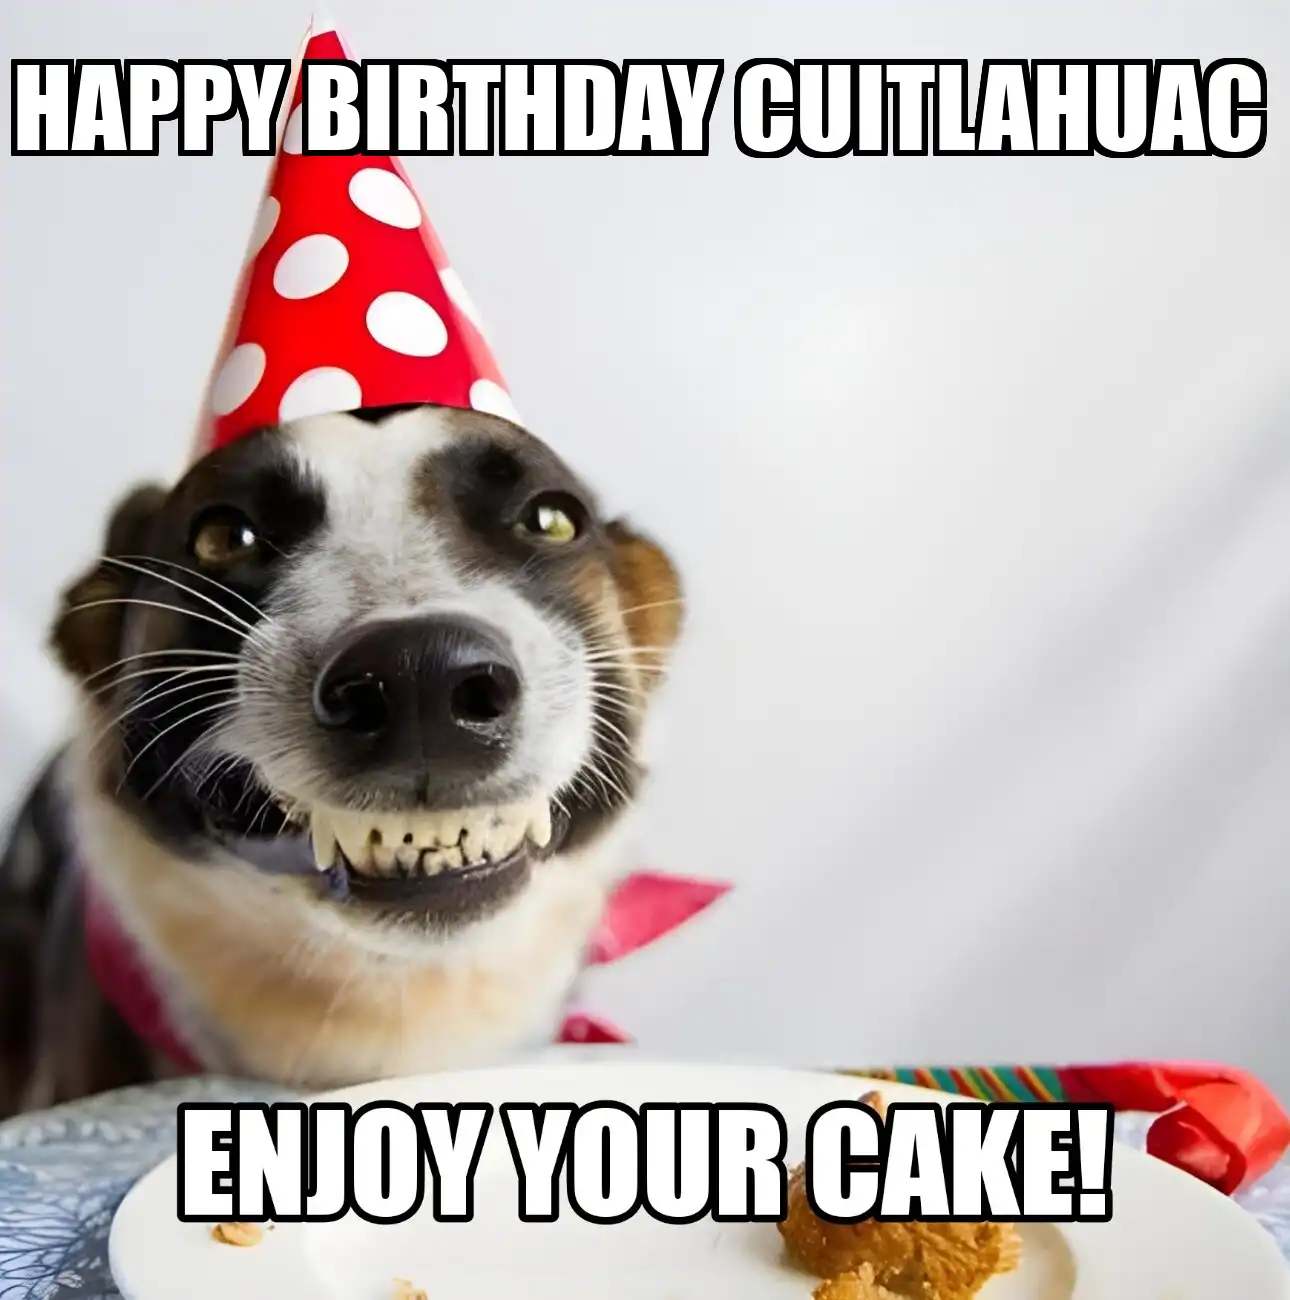 Happy Birthday Cuitlahuac Enjoy Your Cake Dog Meme